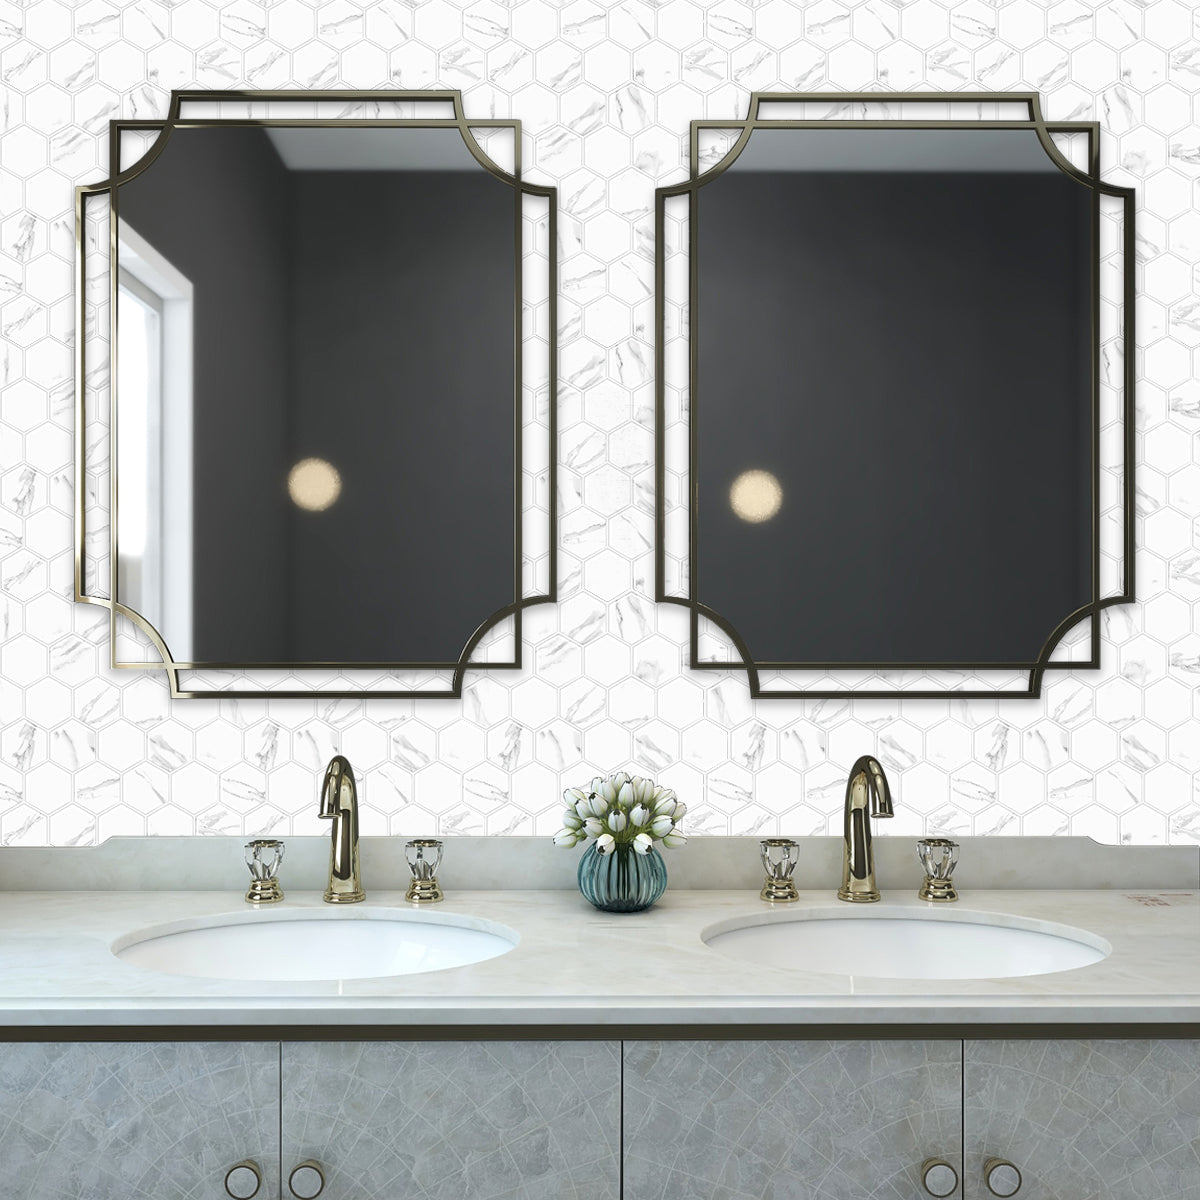 White hexagon tiles above bathroom vanity